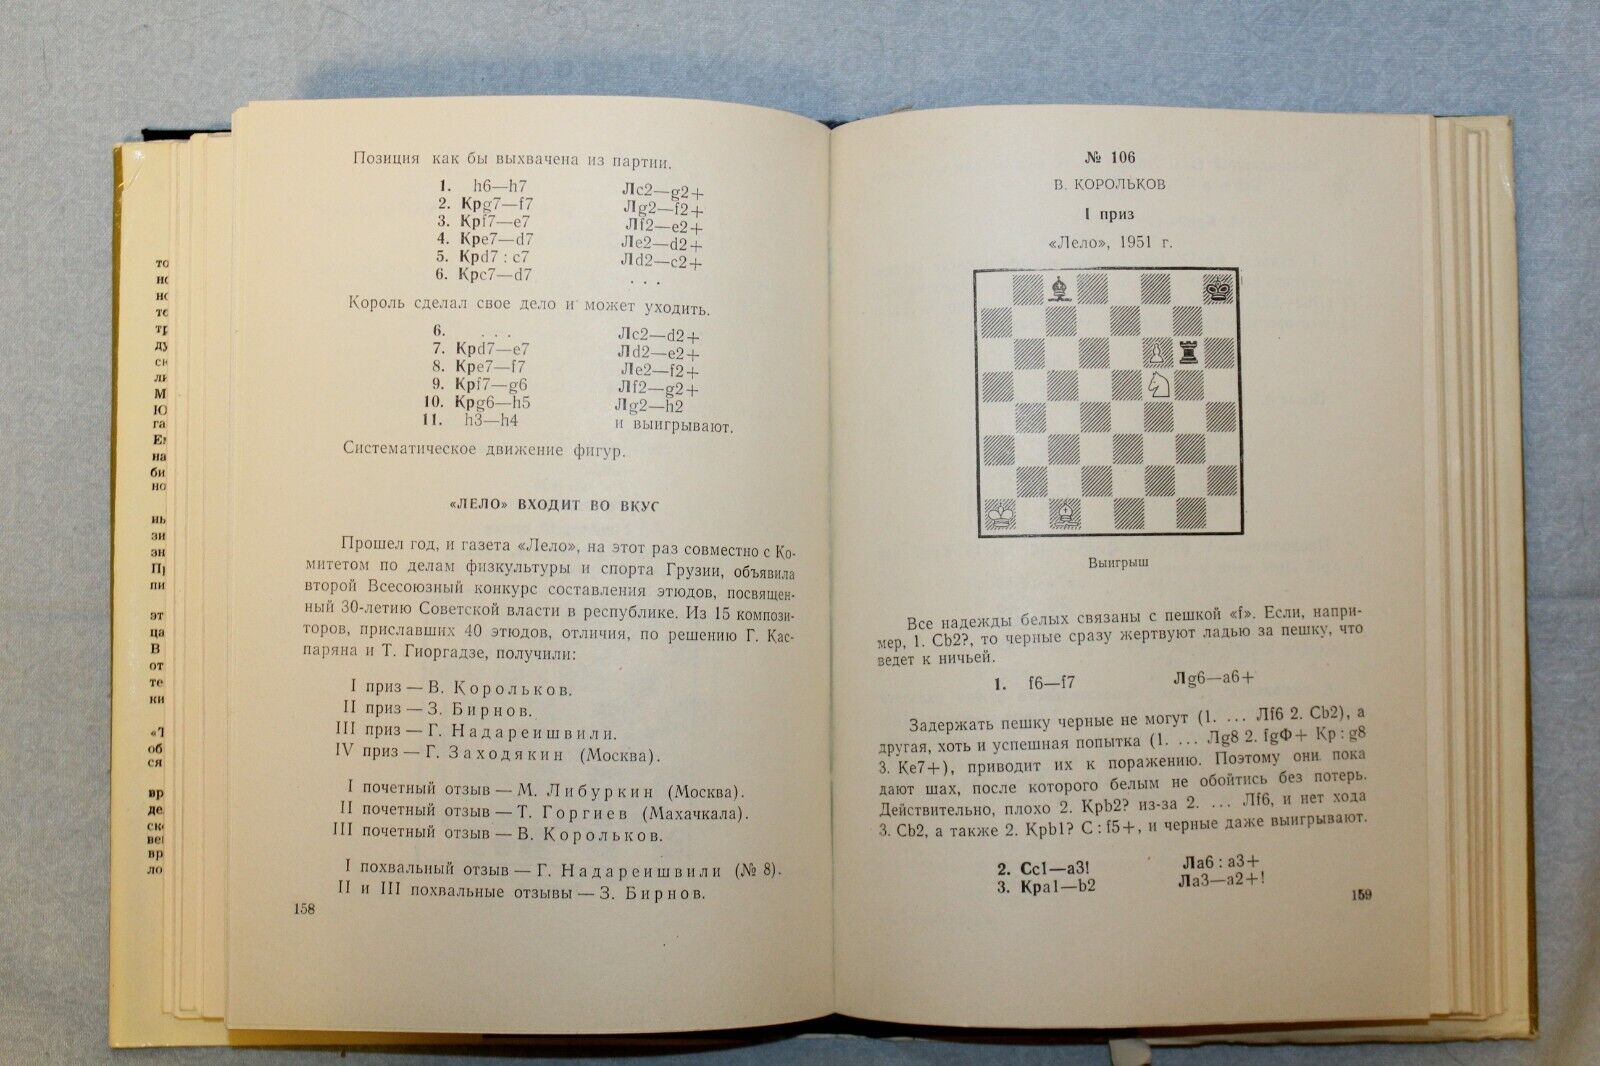 11019.Chess Book signed by G.Nadareishvili to Y.Brazilsky. Chosen Studies.1970